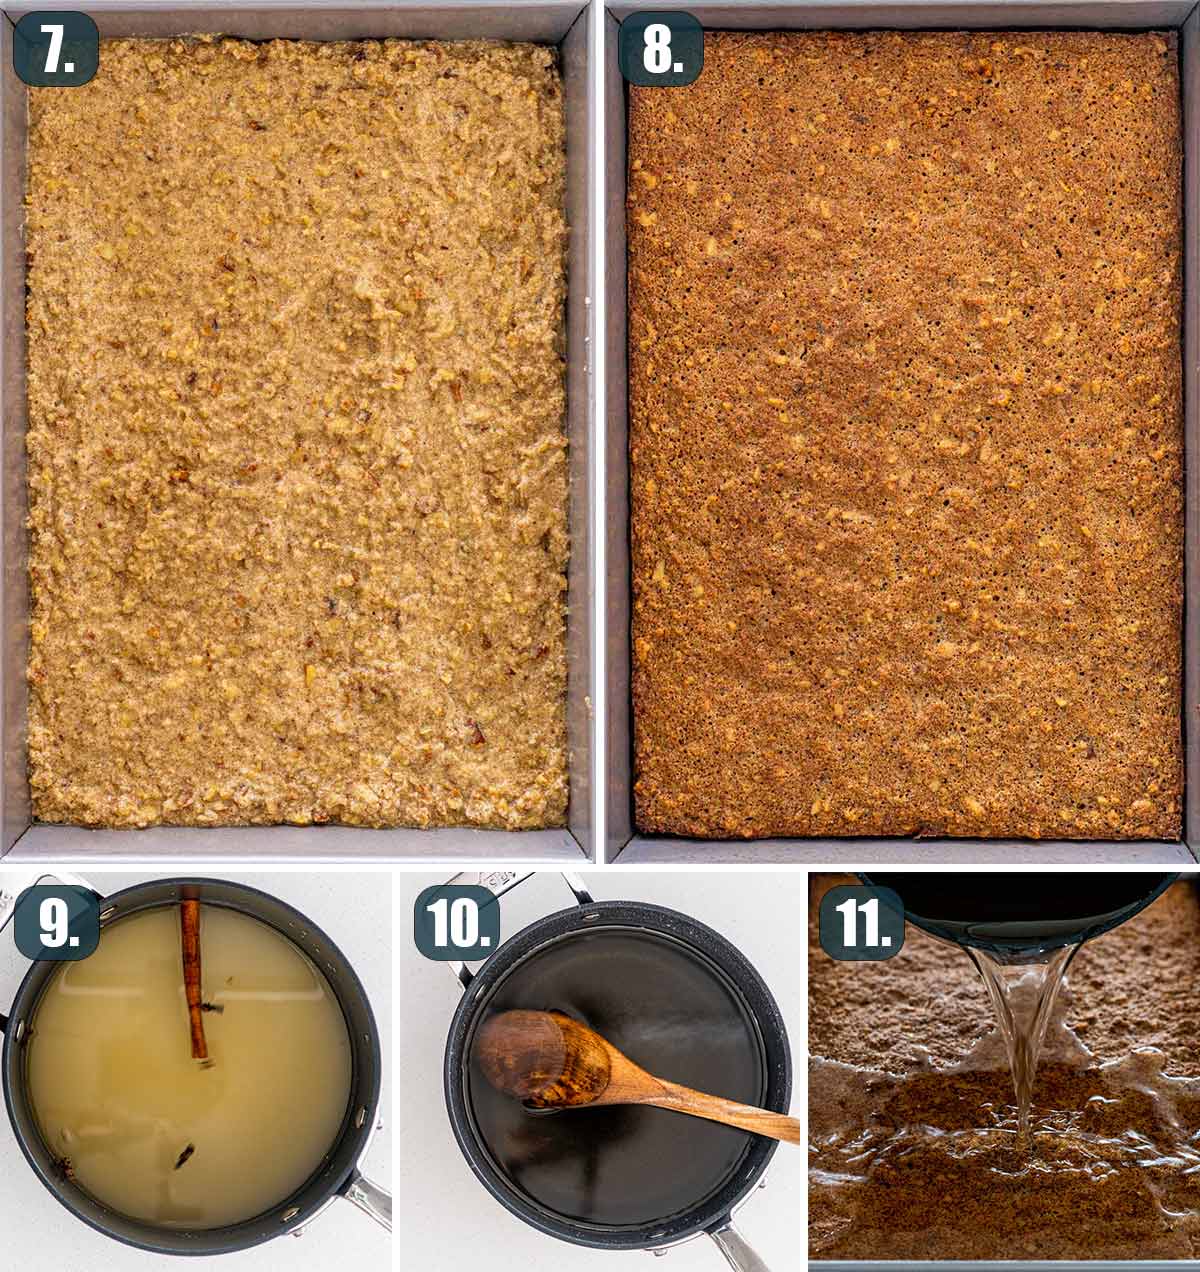 process shots showing how to bake and finish karydopita.